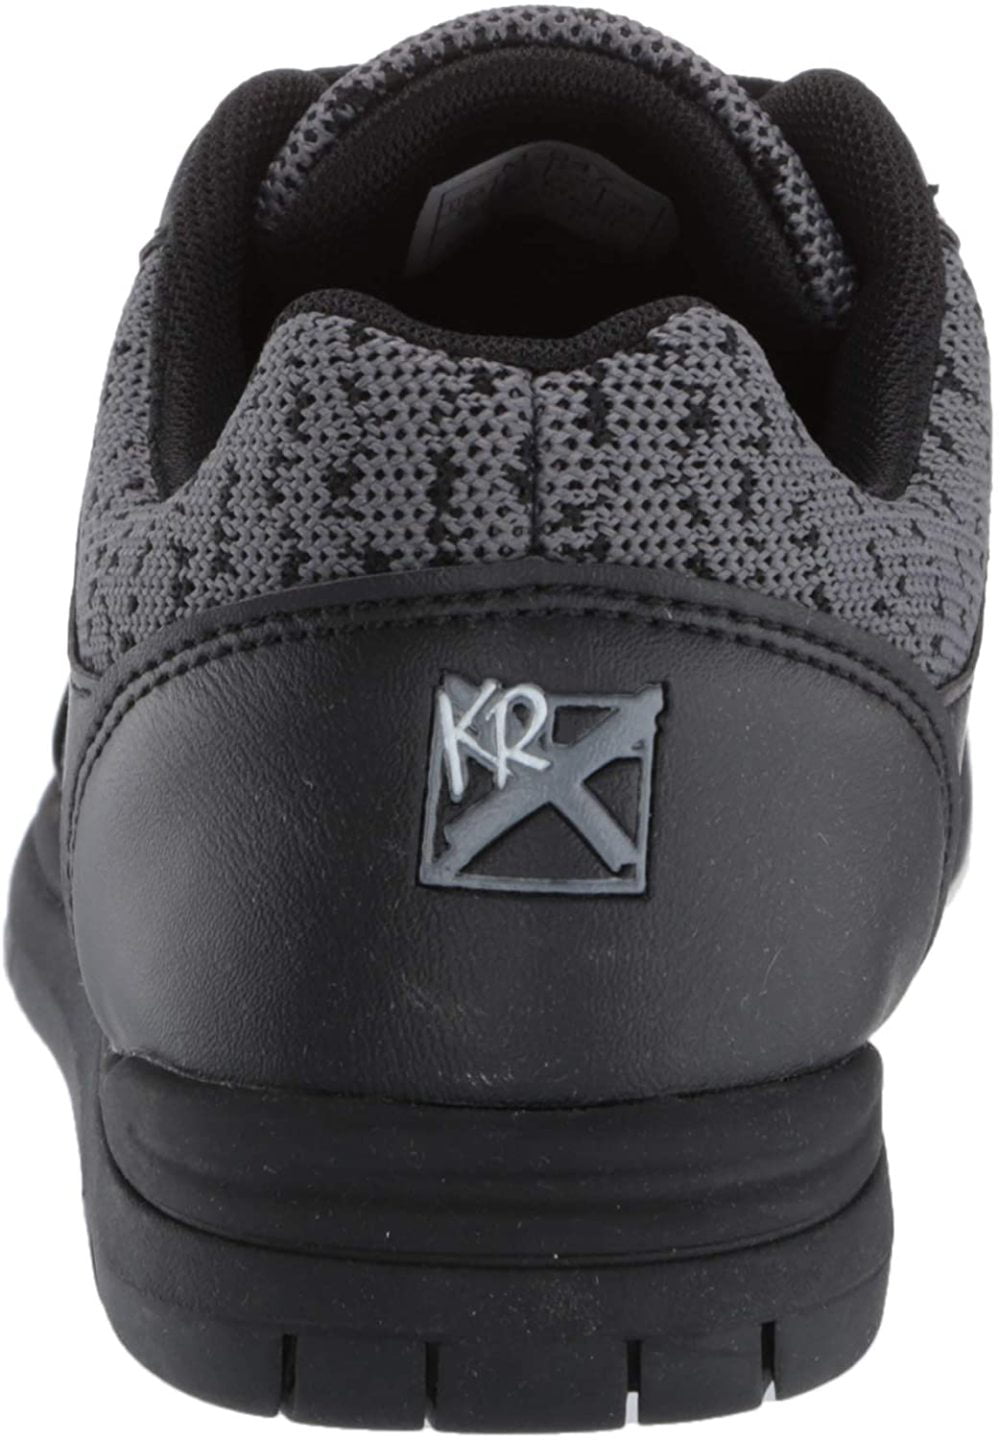 Mens KR Strikeforce Black/Steel Flyer Mesh Bowling Shoes Size 10 